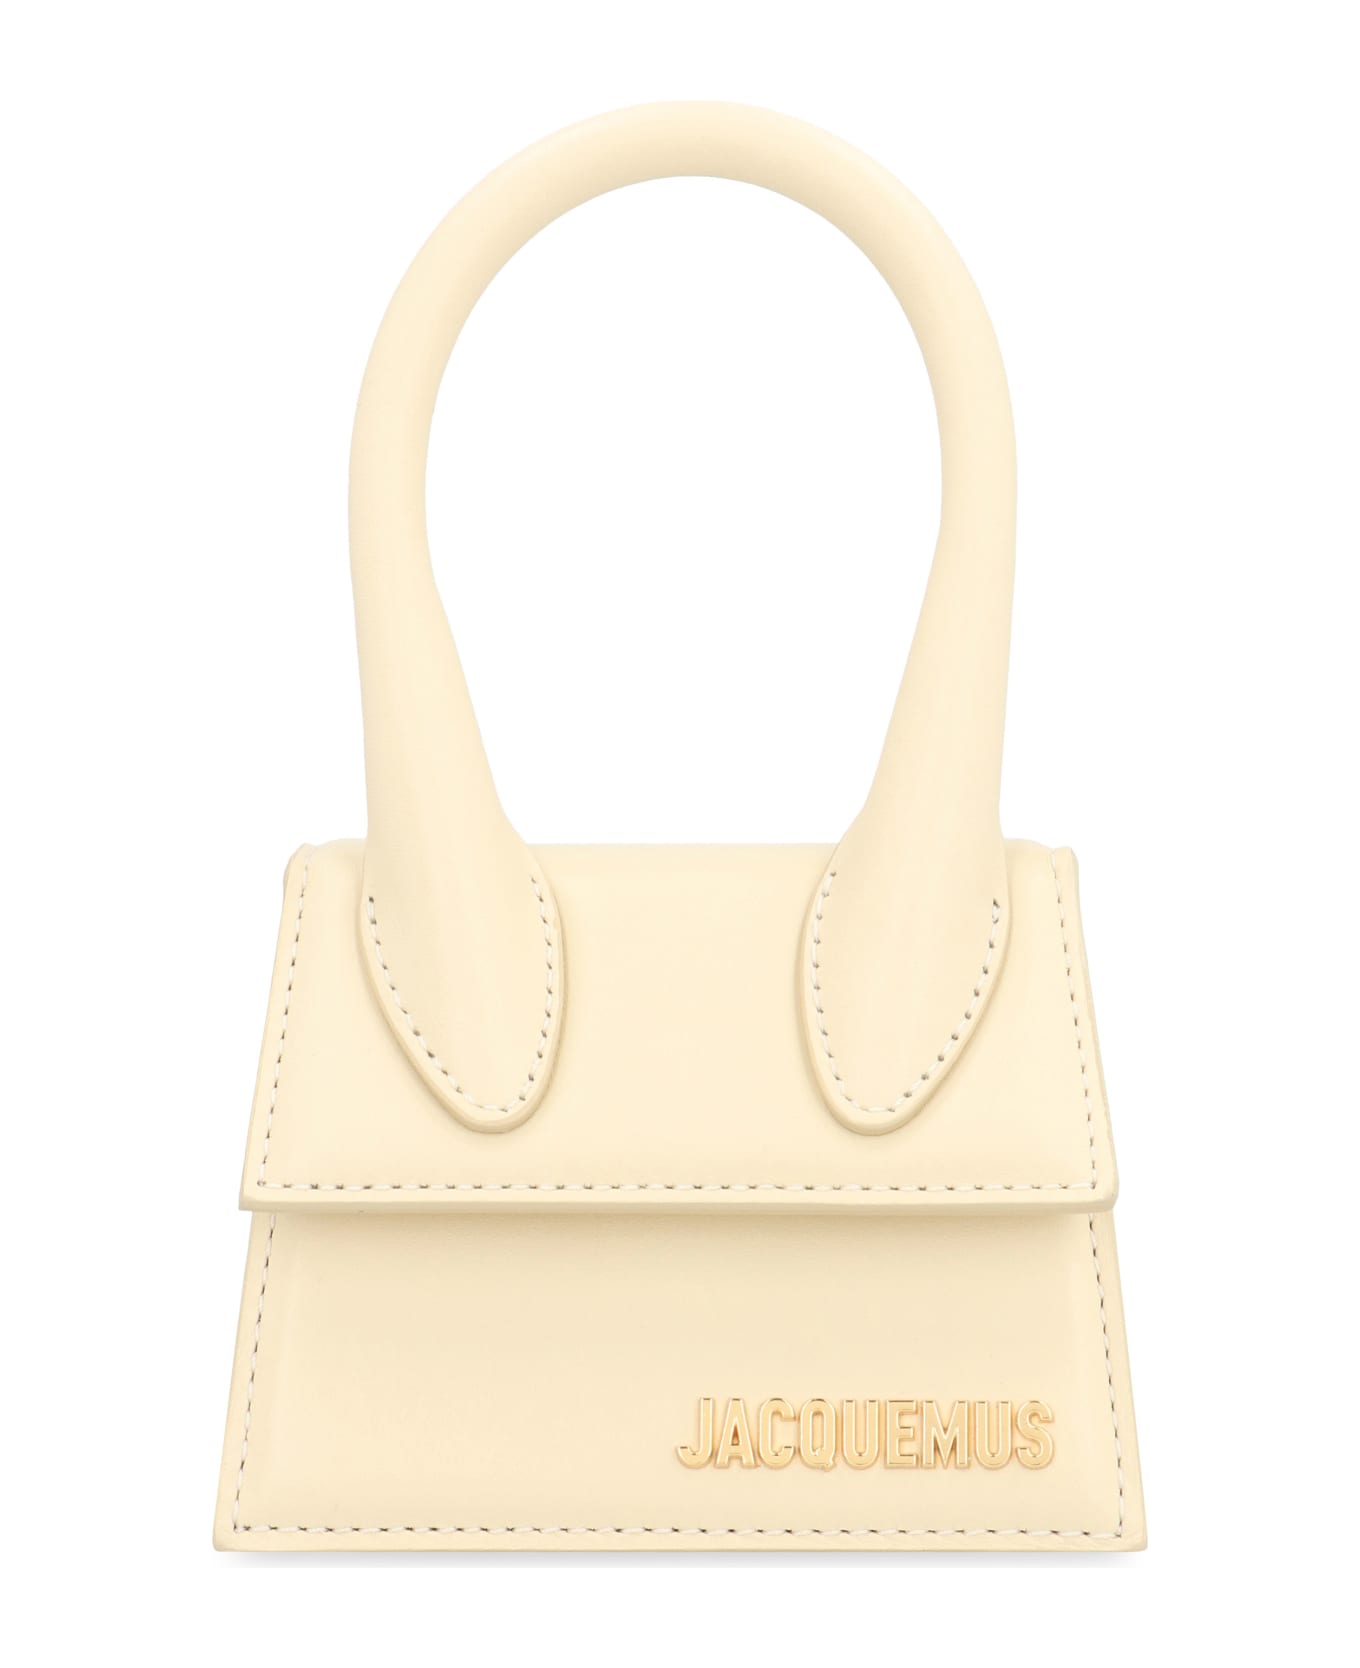 Jacquemus Le Chiquito Leather Handbag - Ivory